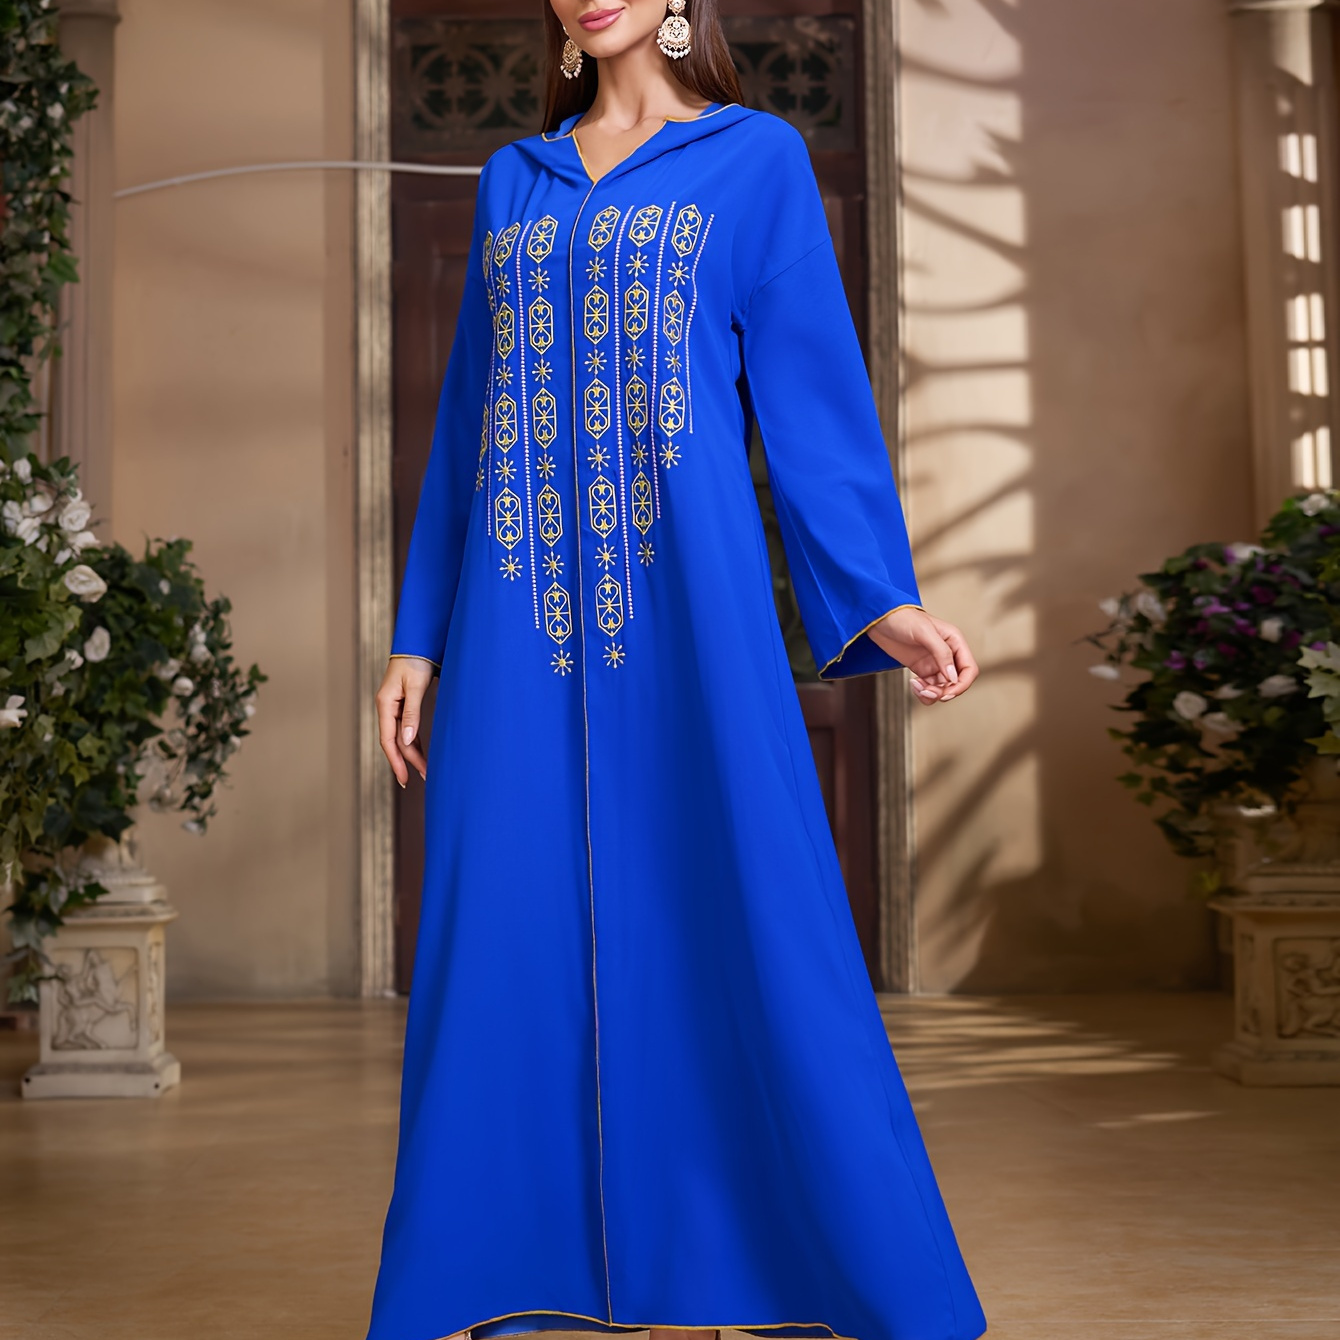 

Embroidered Hooded Midi Dress, Elegant Long Sleeve Loose Dress, Women's Clothing